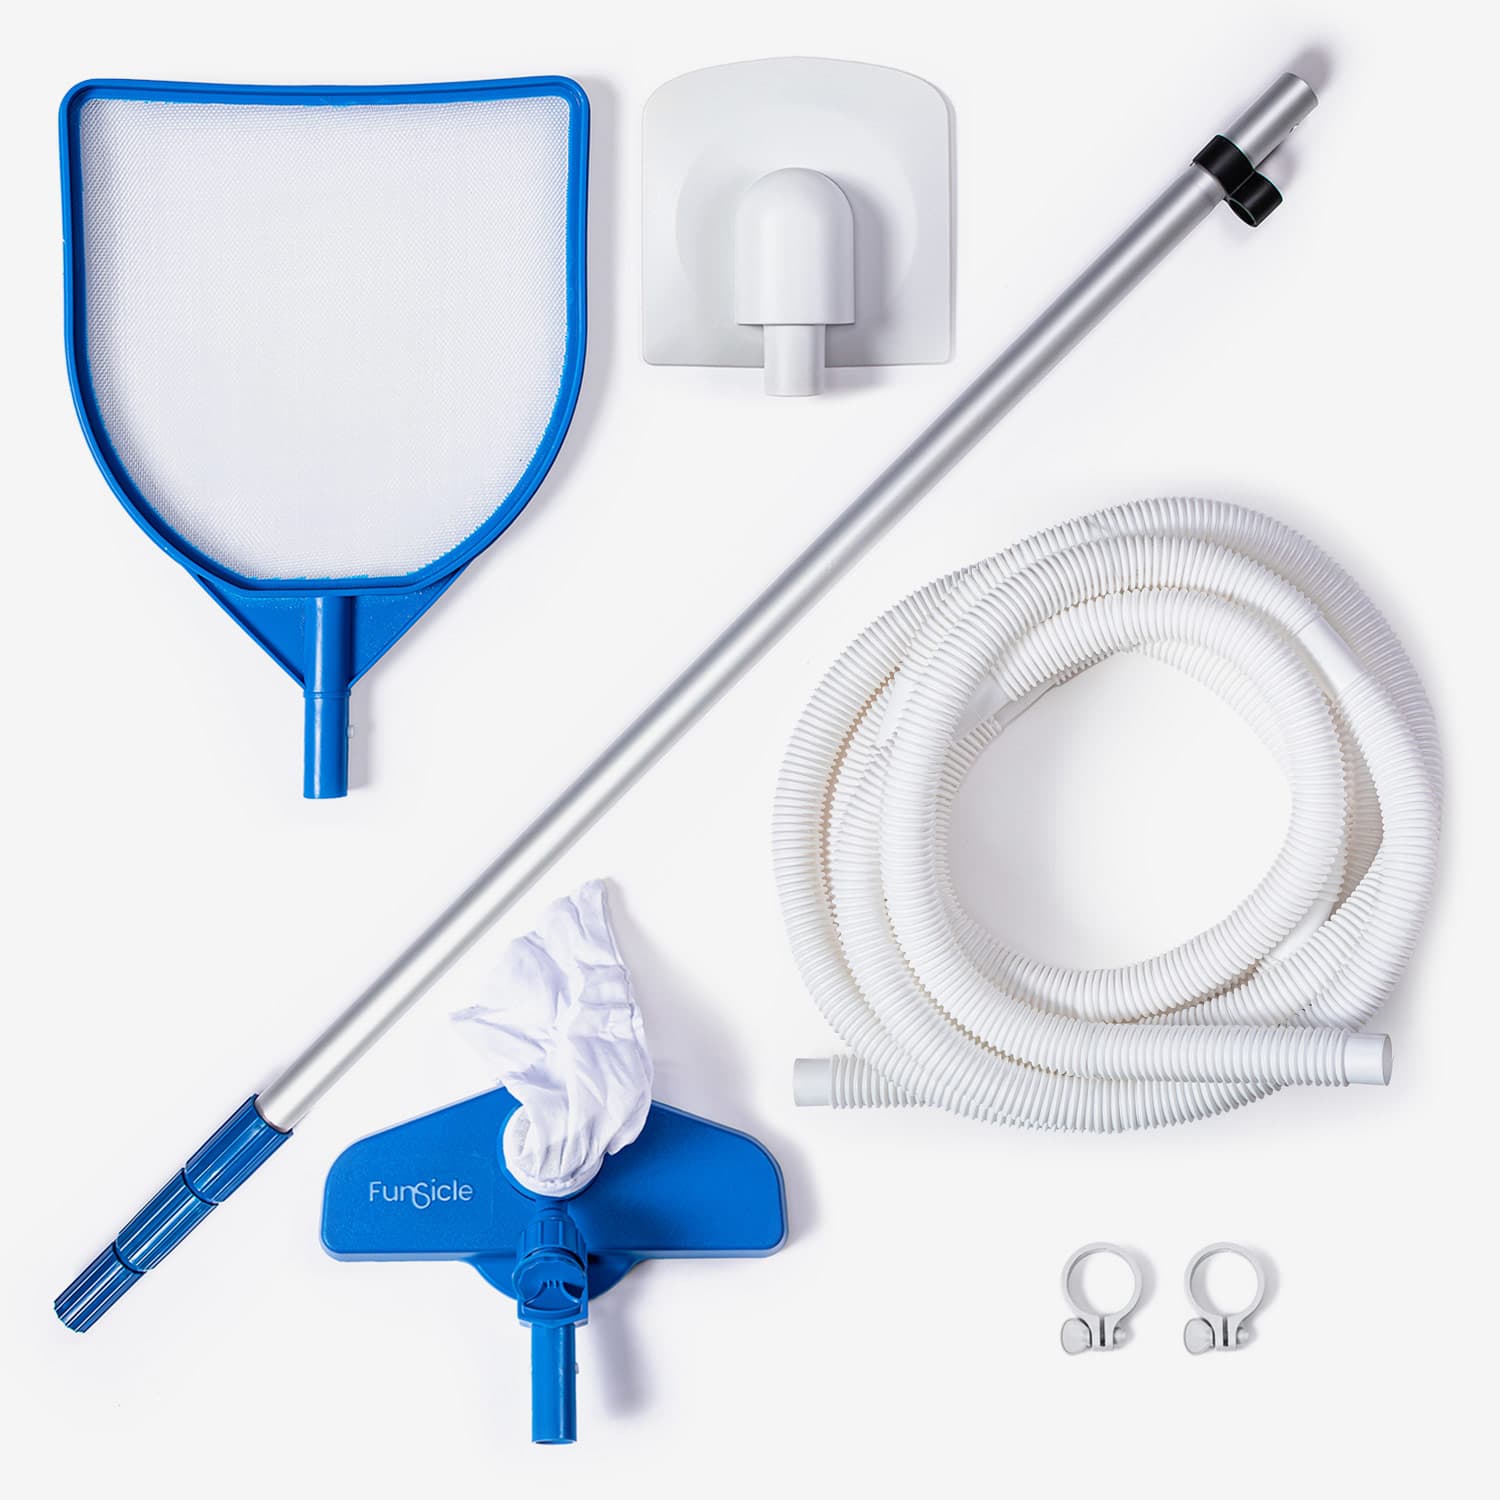 Funsicle Deluxe Maintenance Kit Blue color